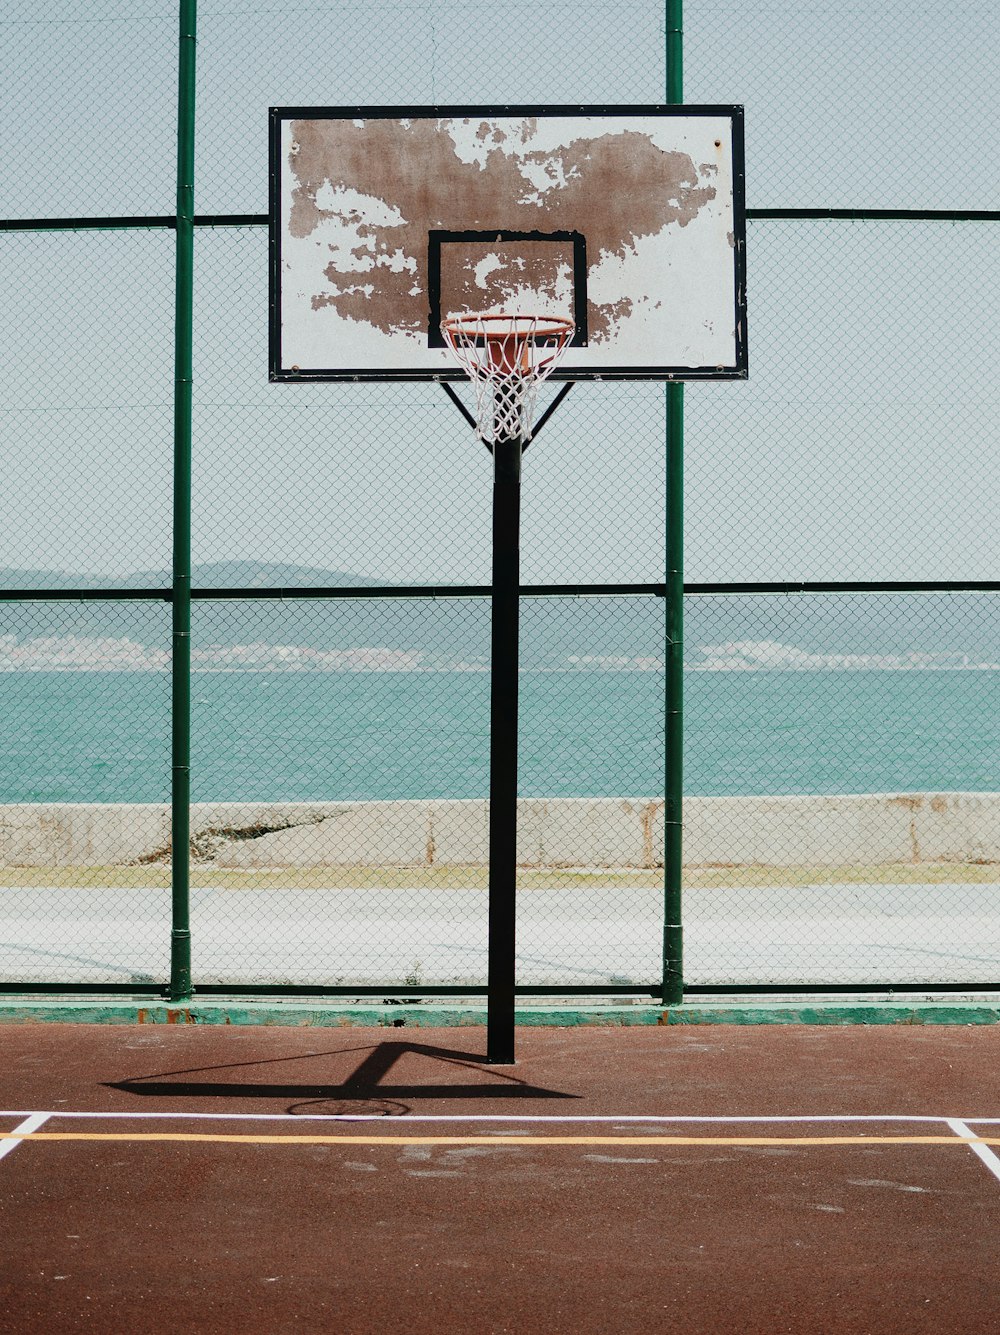 basketball hoop with no smoking sign